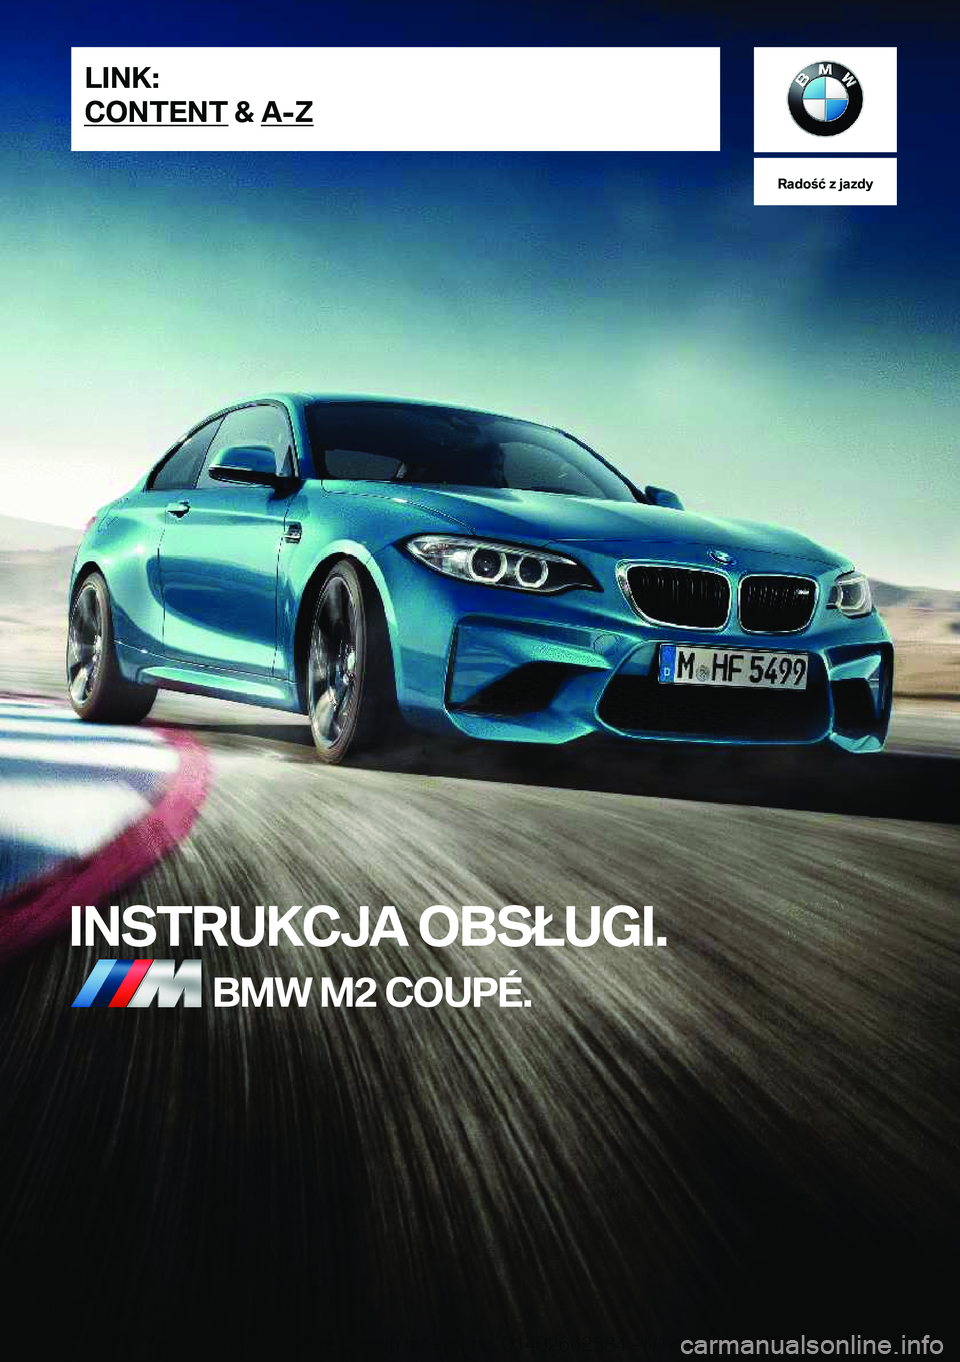 BMW M2 2018  Instrukcja obsługi (in Polish) �R�a�d�o�ć��z��j�a�z�d�y
�I�N�S�T�R�U�K�C�J�A��O�B�S�Ł�U�G�I�.�B�M�W��M�2��C�O�U�P�